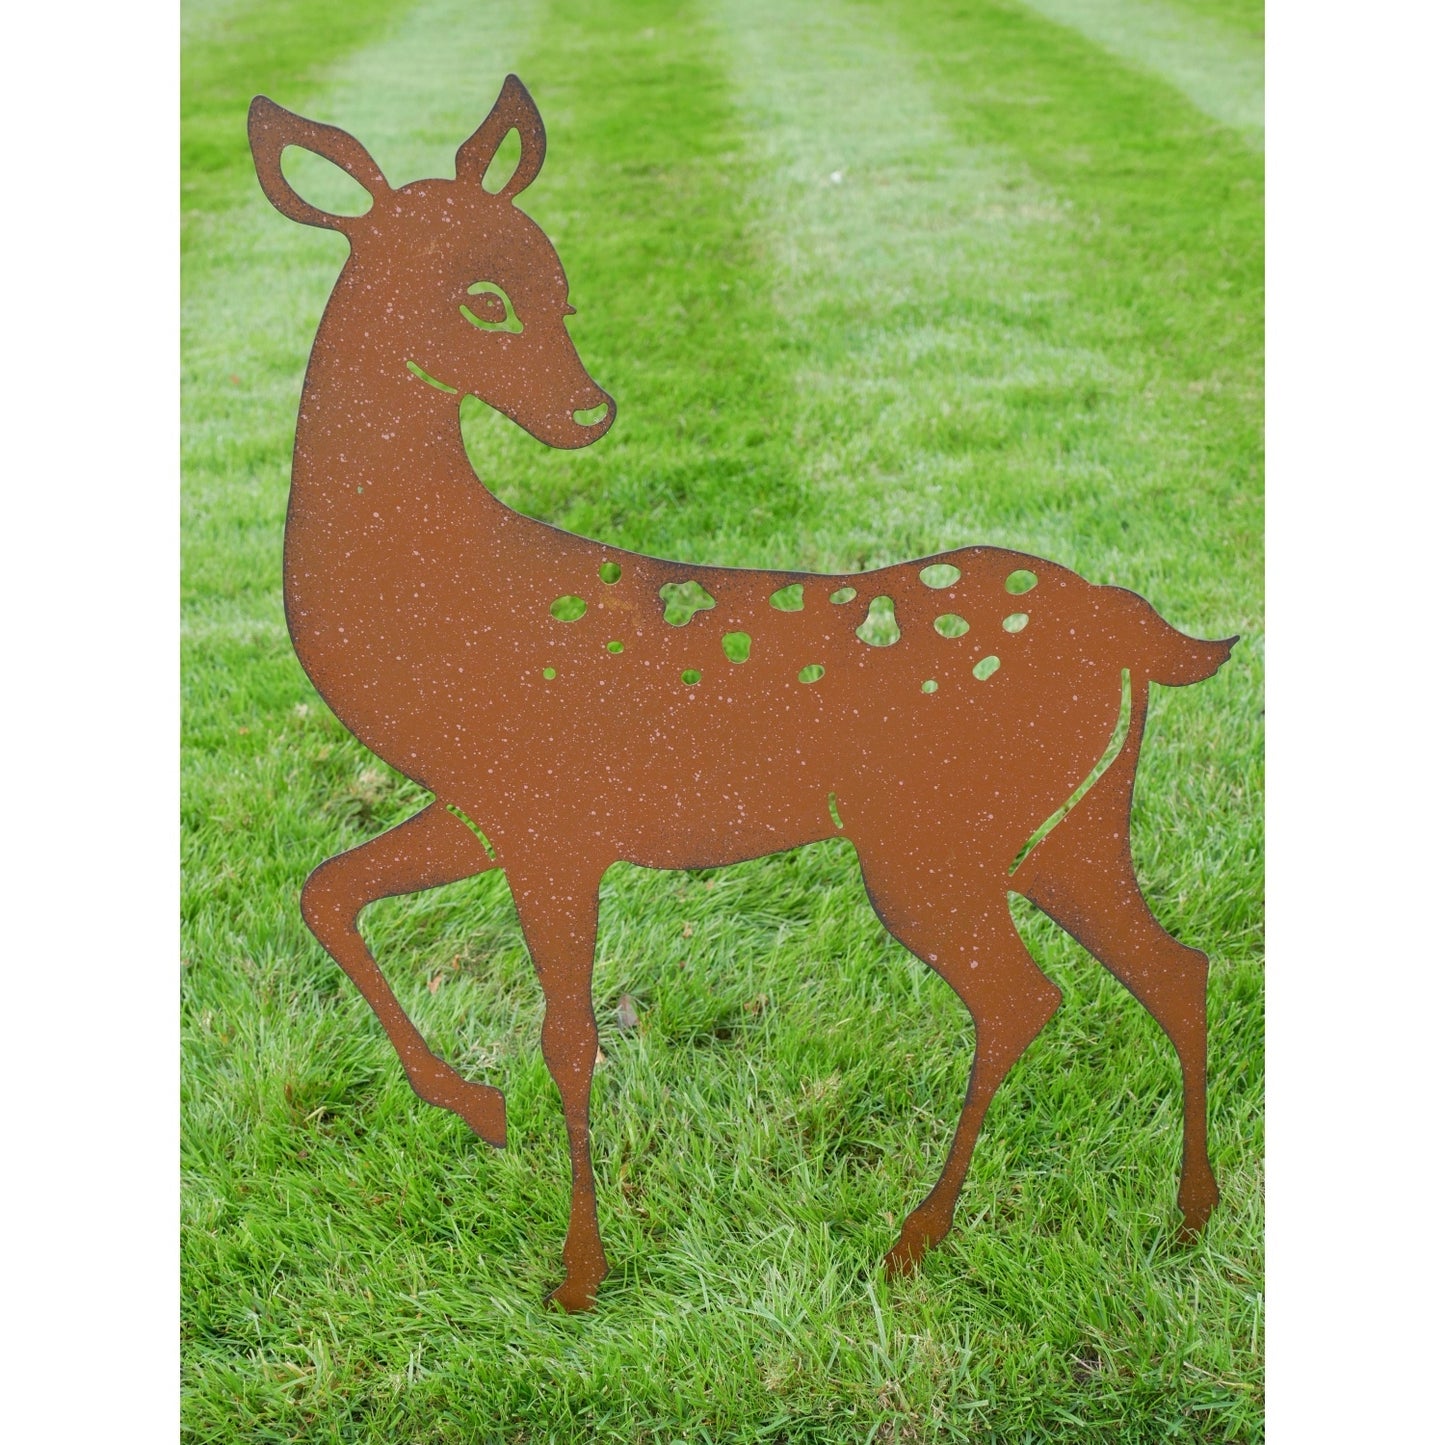 Rusty Deer Stag Silhouette Freestanding Garden Animal Figure Metal 2'7"H 1'9" W